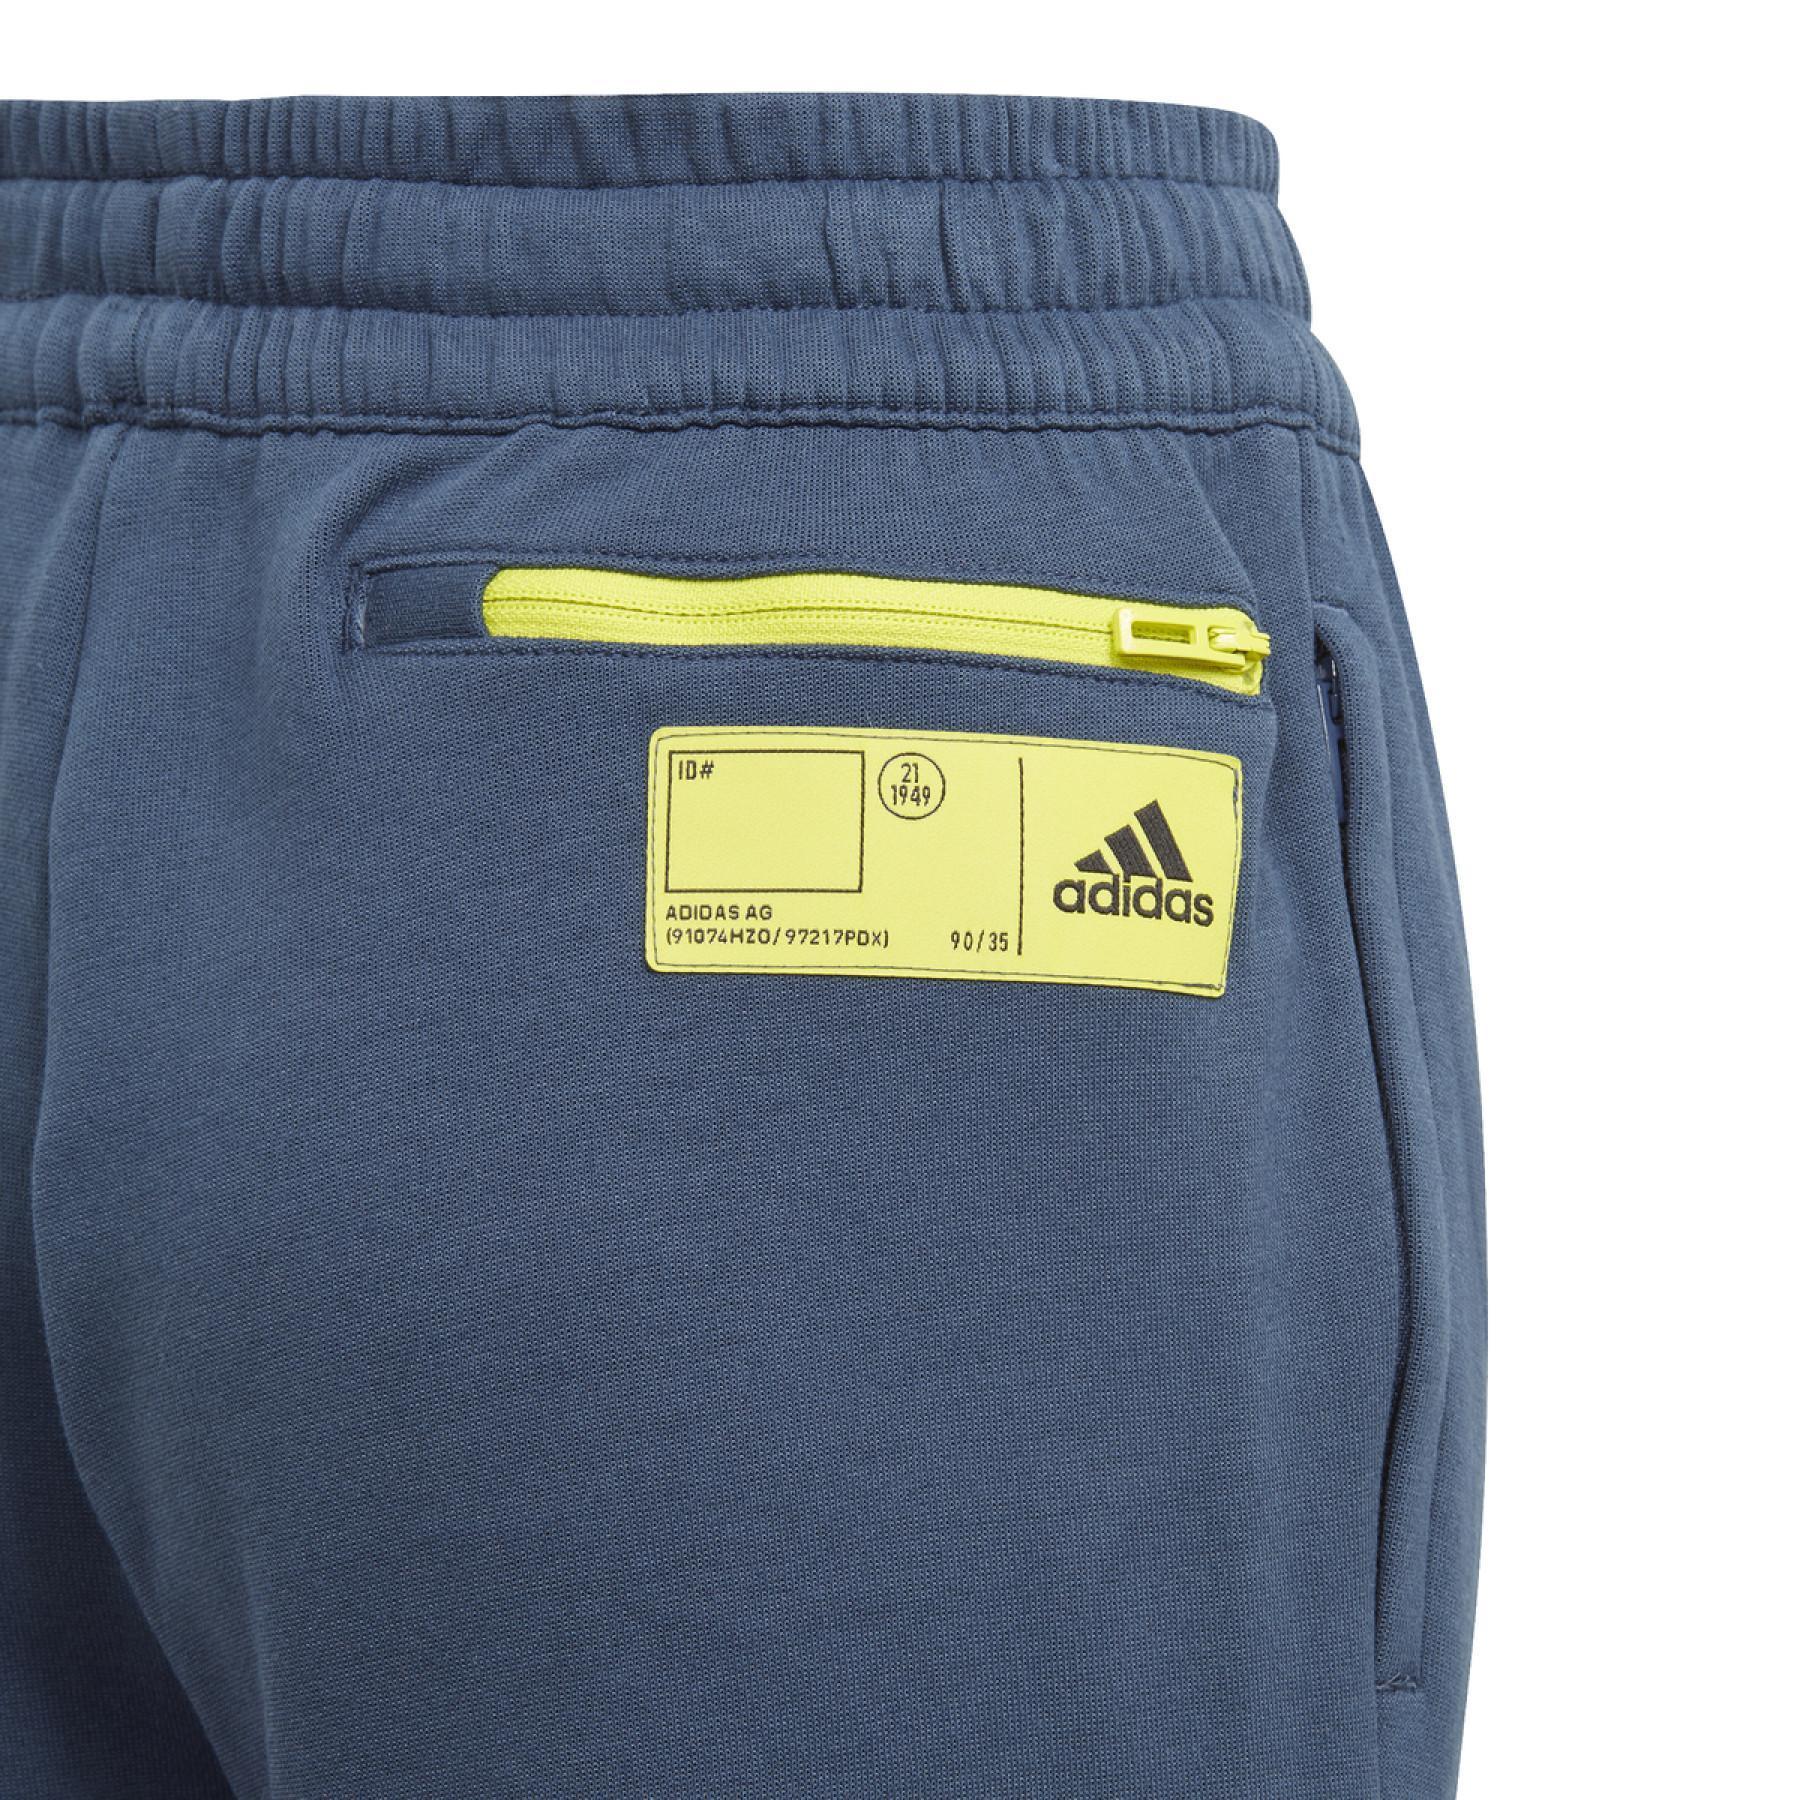 Children's trousers adidas Comfort Doubleknit